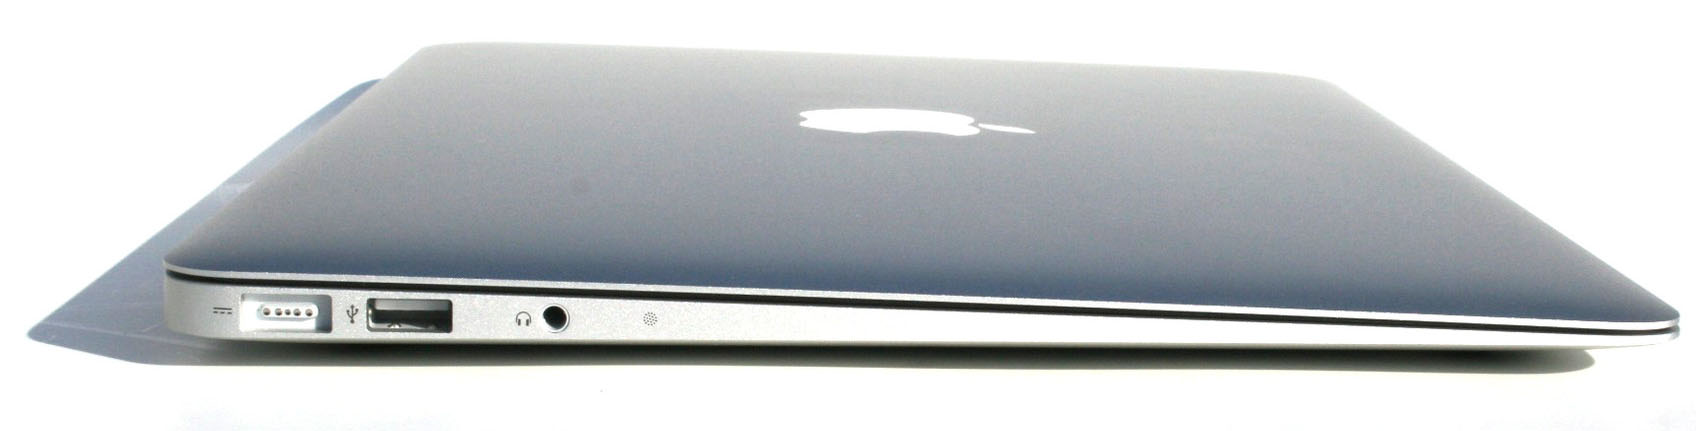 Apple MacBook Air 11 (Mid-2011) - 规格、测试和价格| LaptopMedia 中国